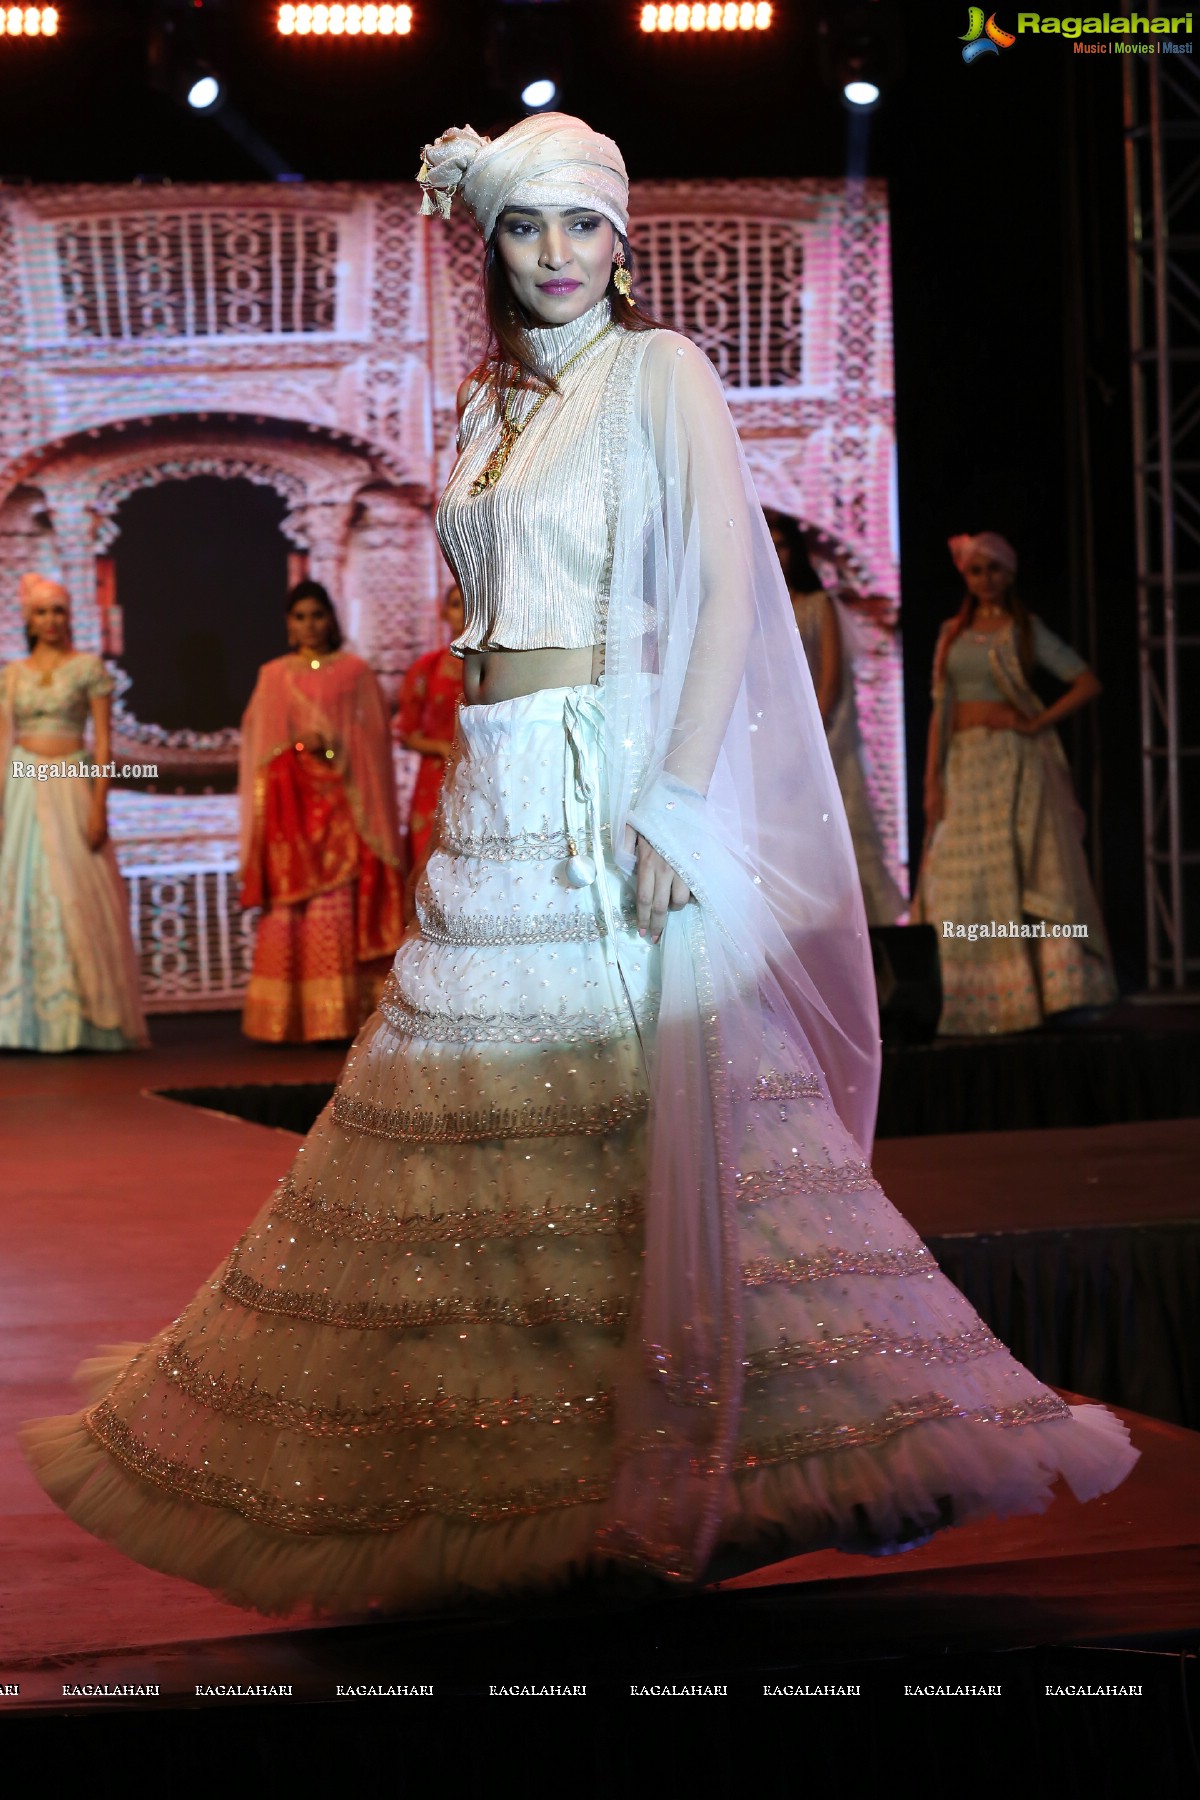 Fashion Fiesta Fashion Show - A Walk For a Cause February 2020 at Taj Deccan